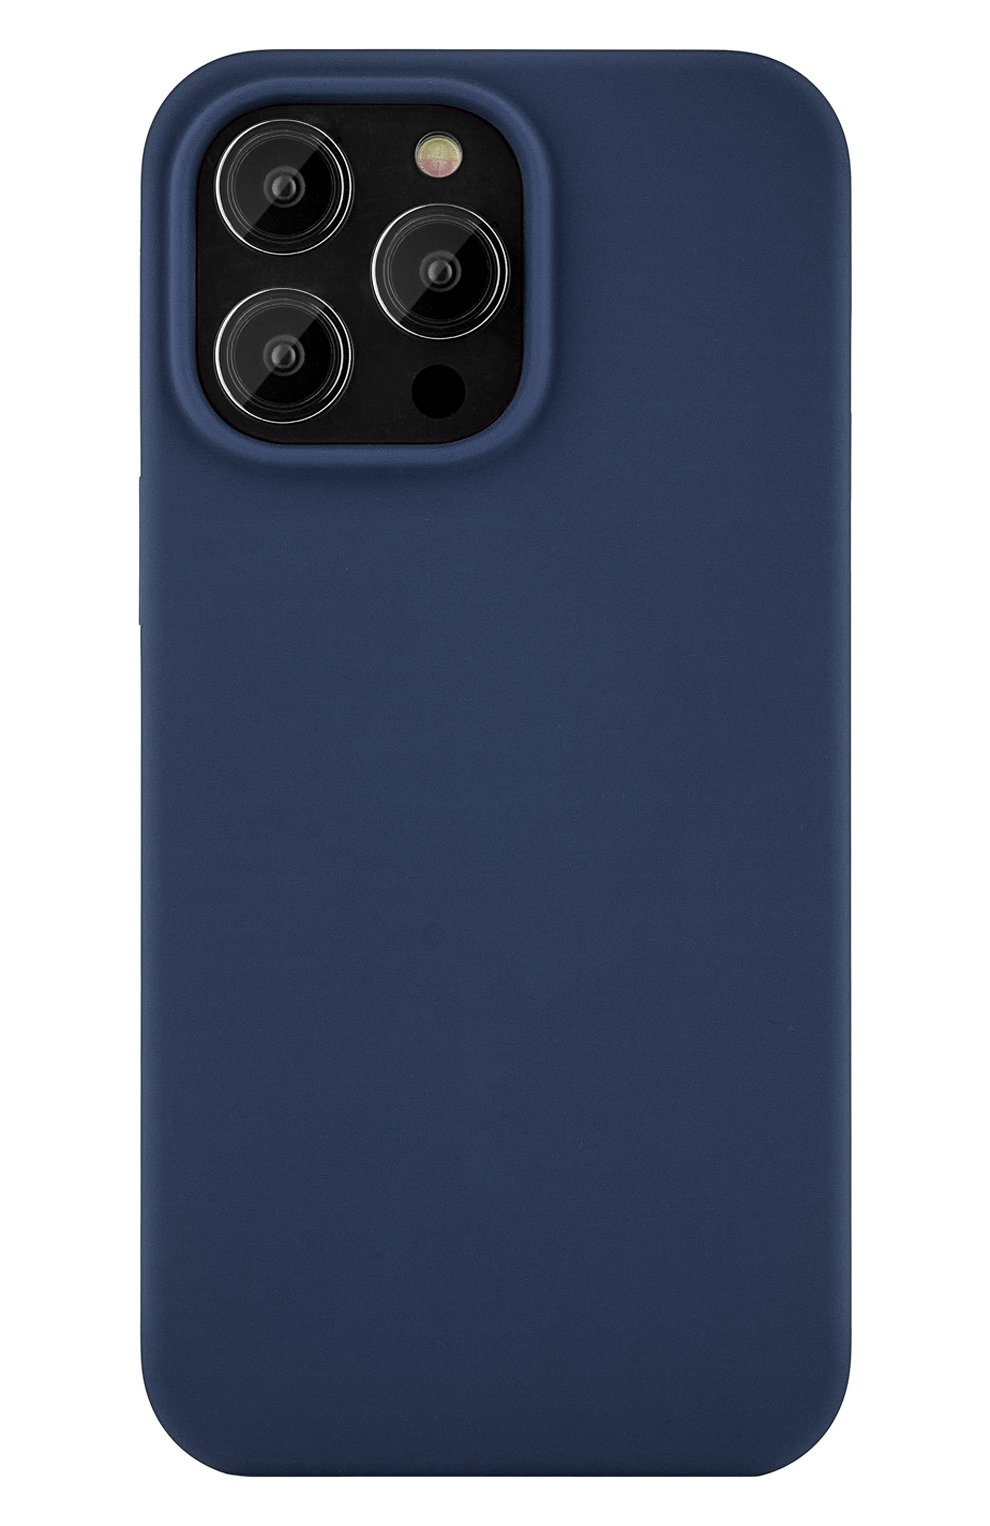 Чехол для iphone 14 pro max UBEAR темно-синего цвета, арт. CS214DB67PTH-I22M | Фото 1